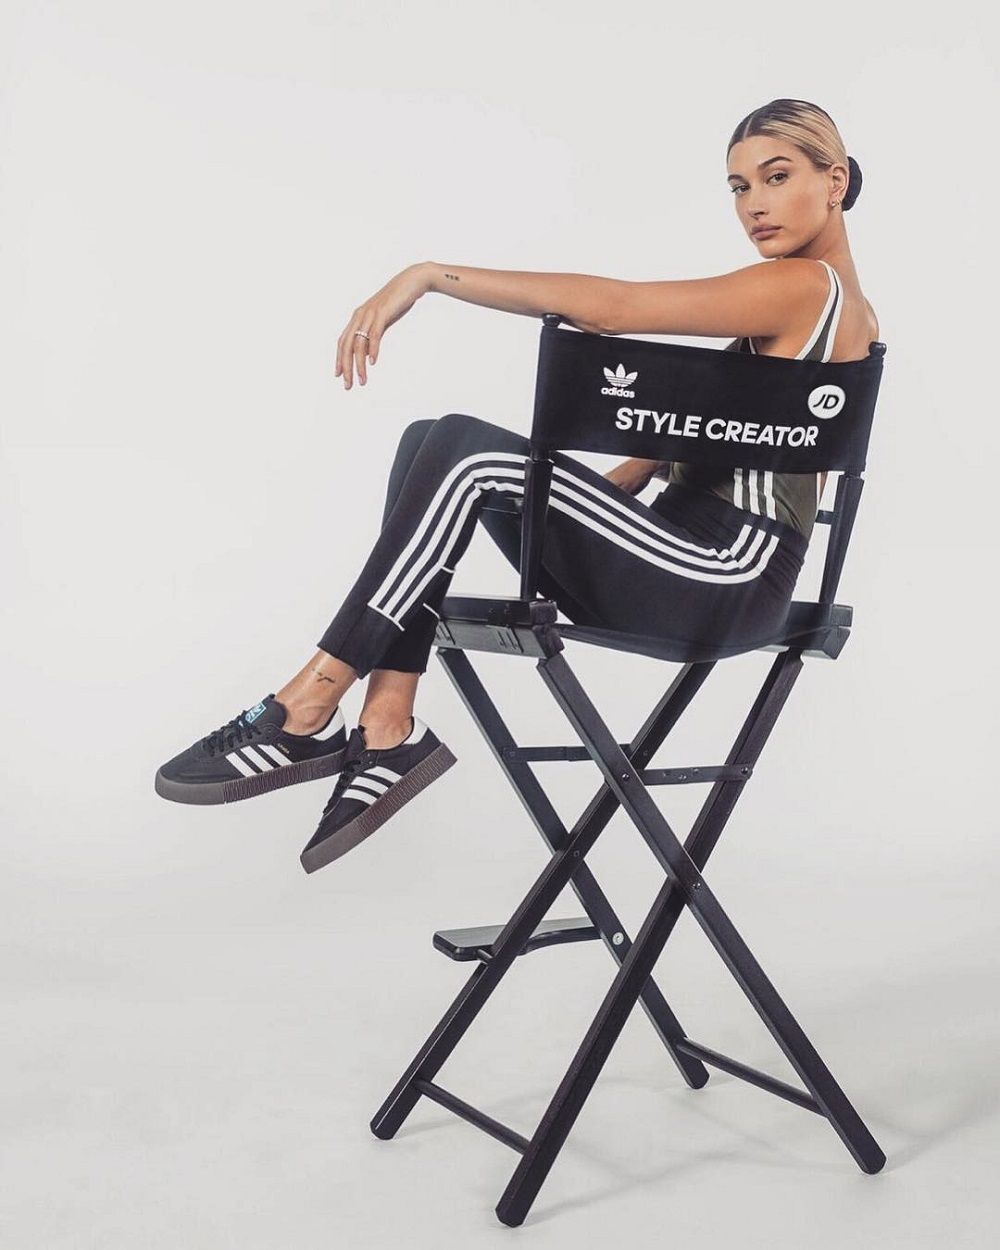 Hailey Baldwin Terpilih Menjadi 'Style Creator' Adidas di JD Sports